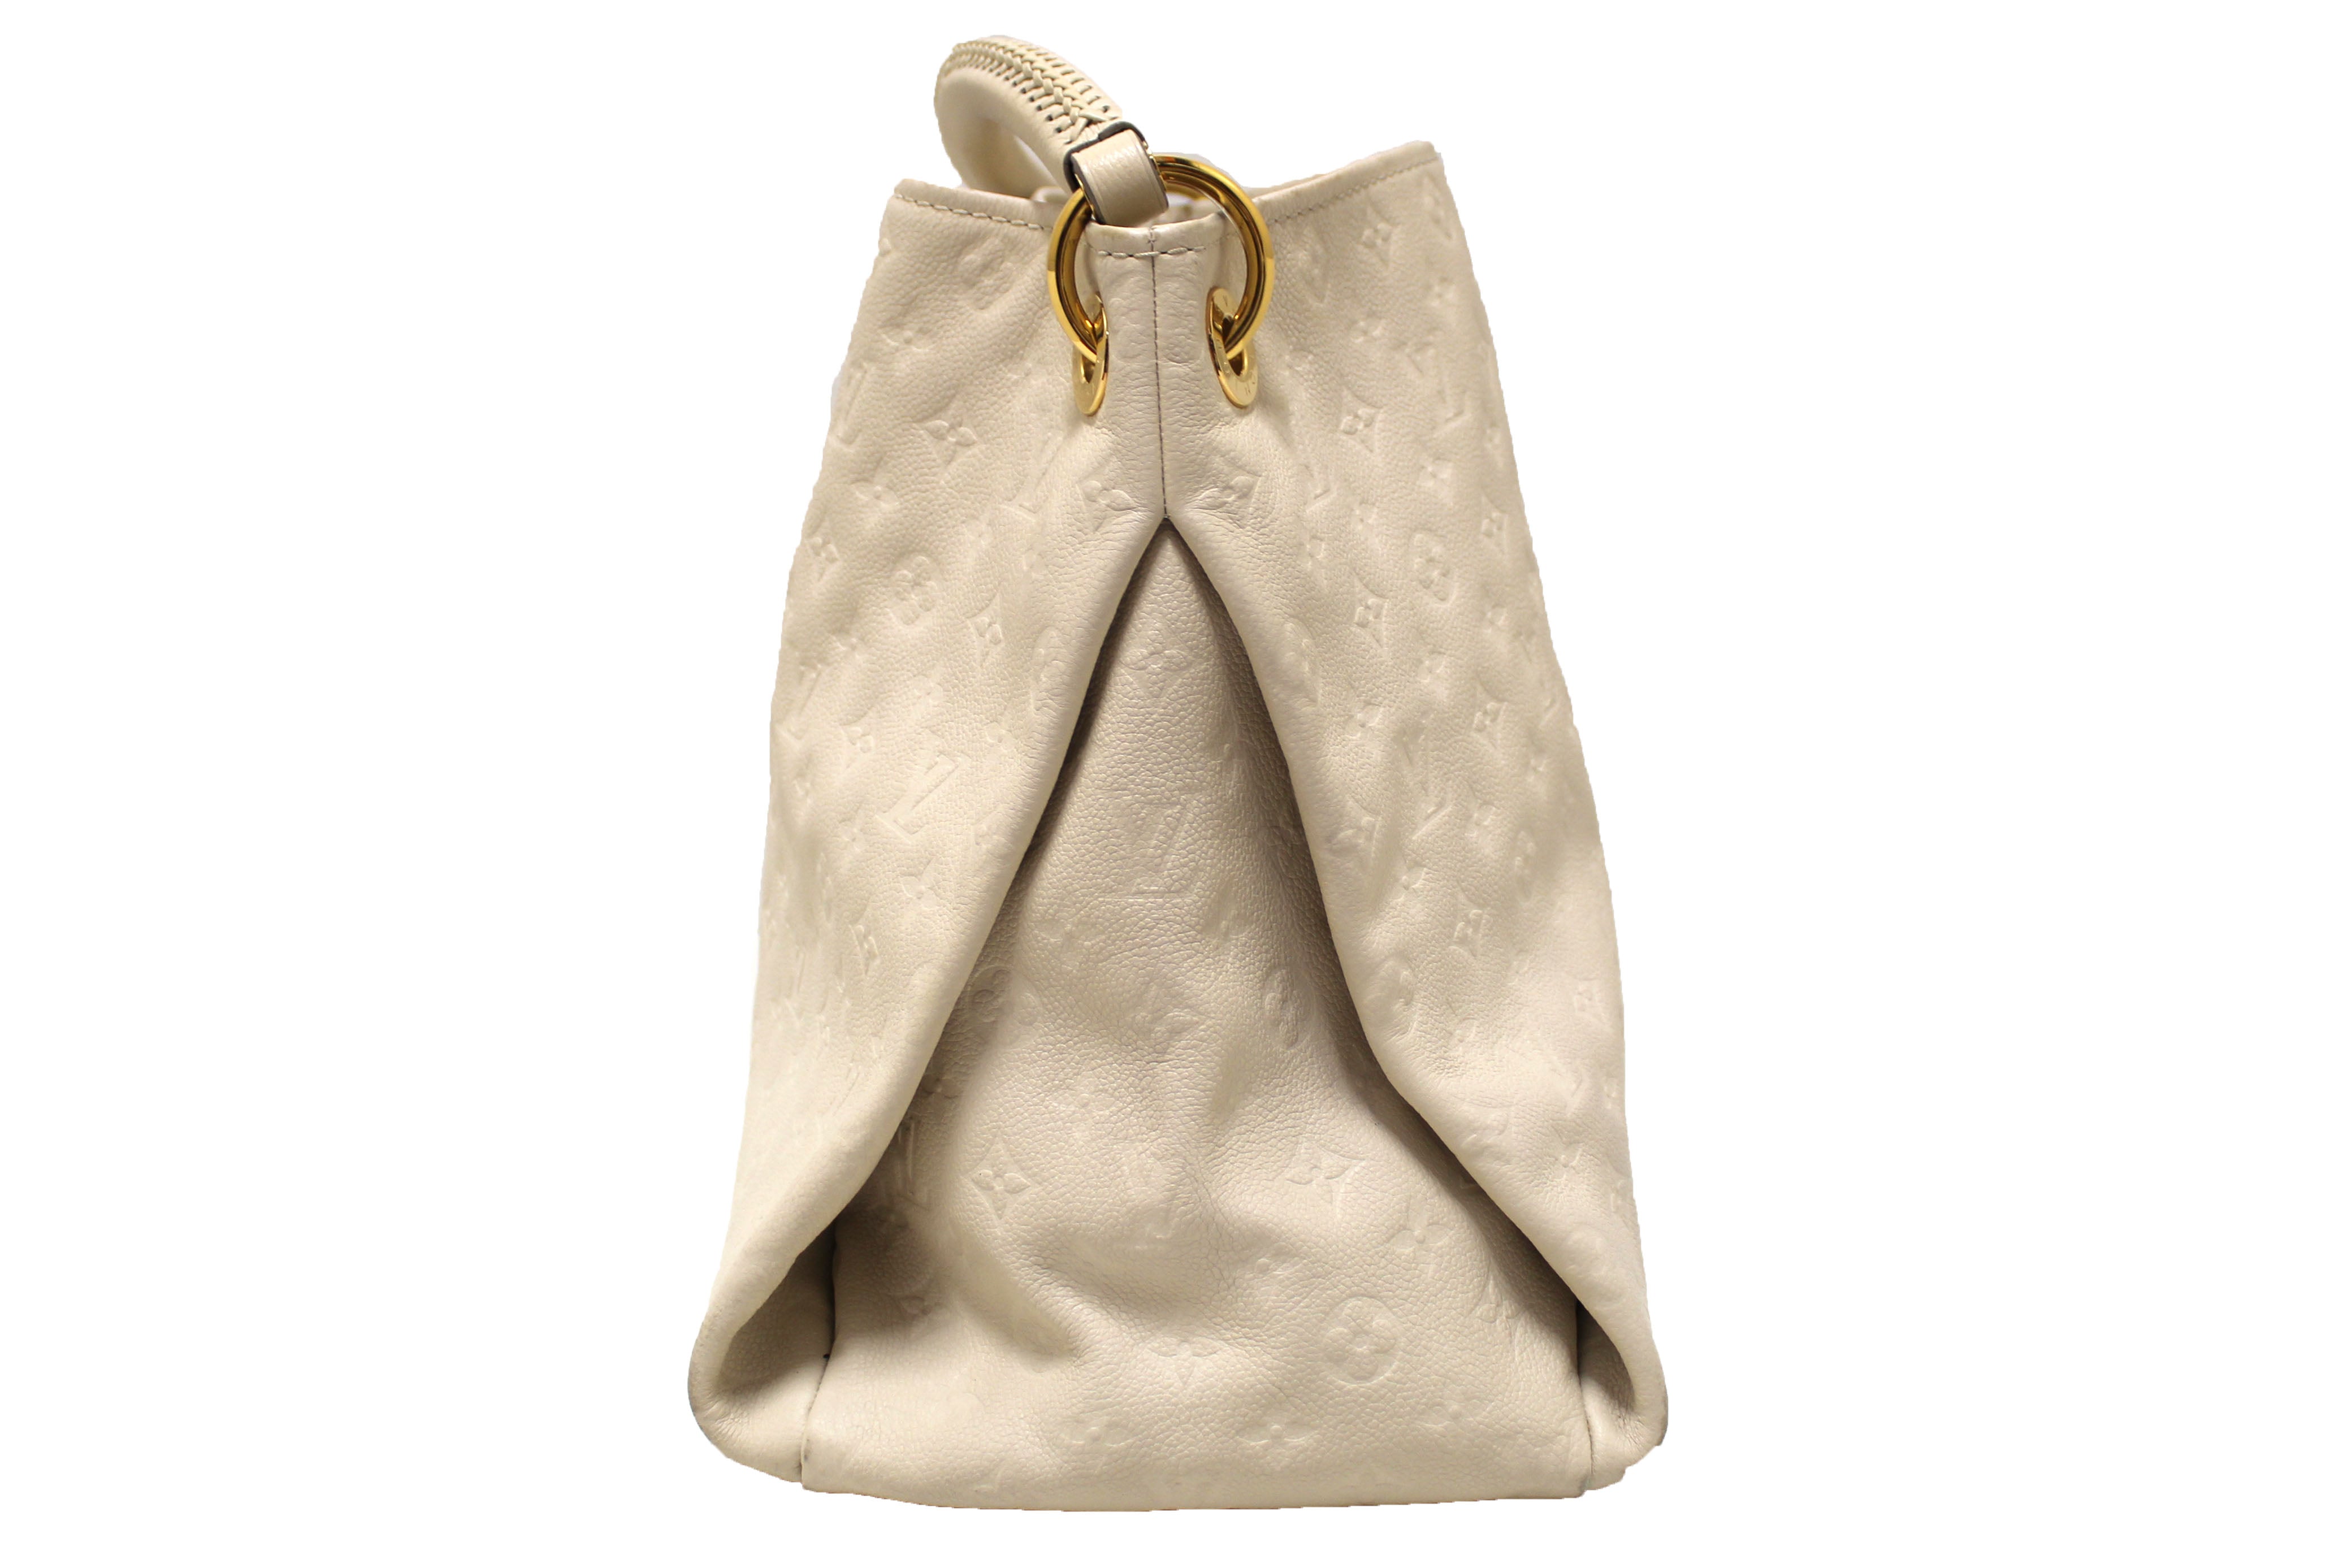 Louis Vuitton Artsy Monogram Tote Bag